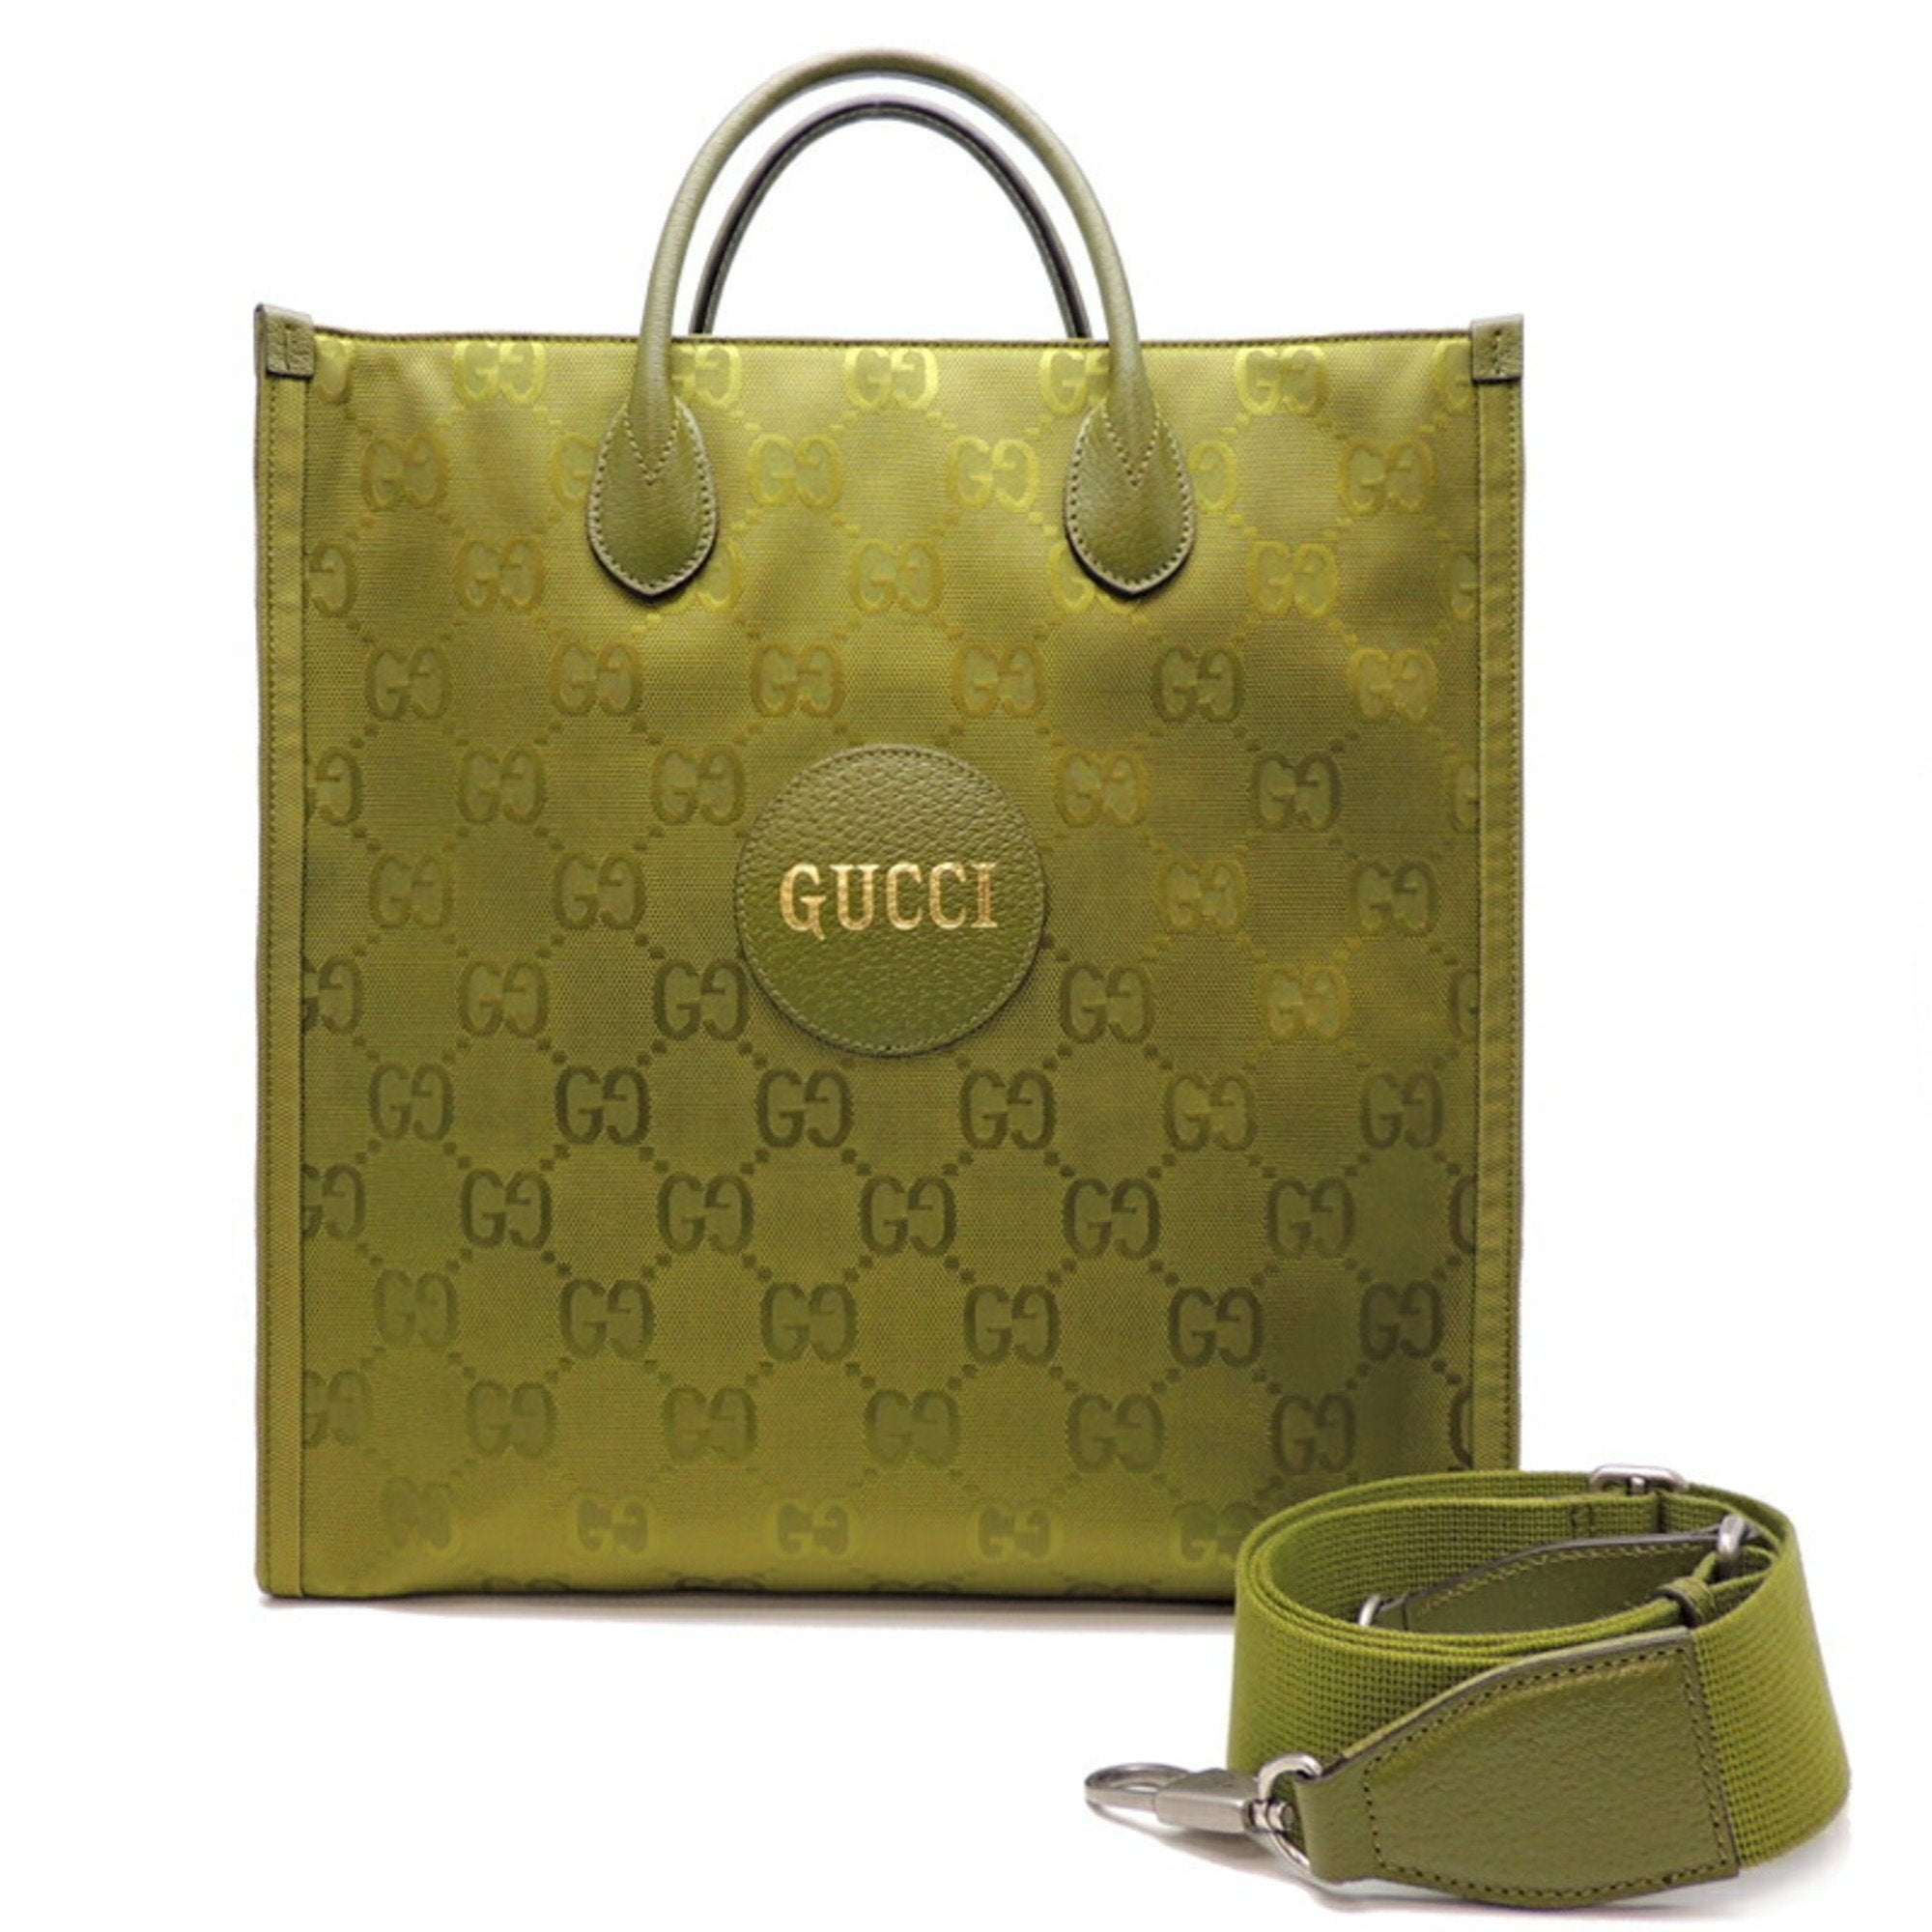 GUCCI - Blondie small leather cross-body bag | Selfridges.com